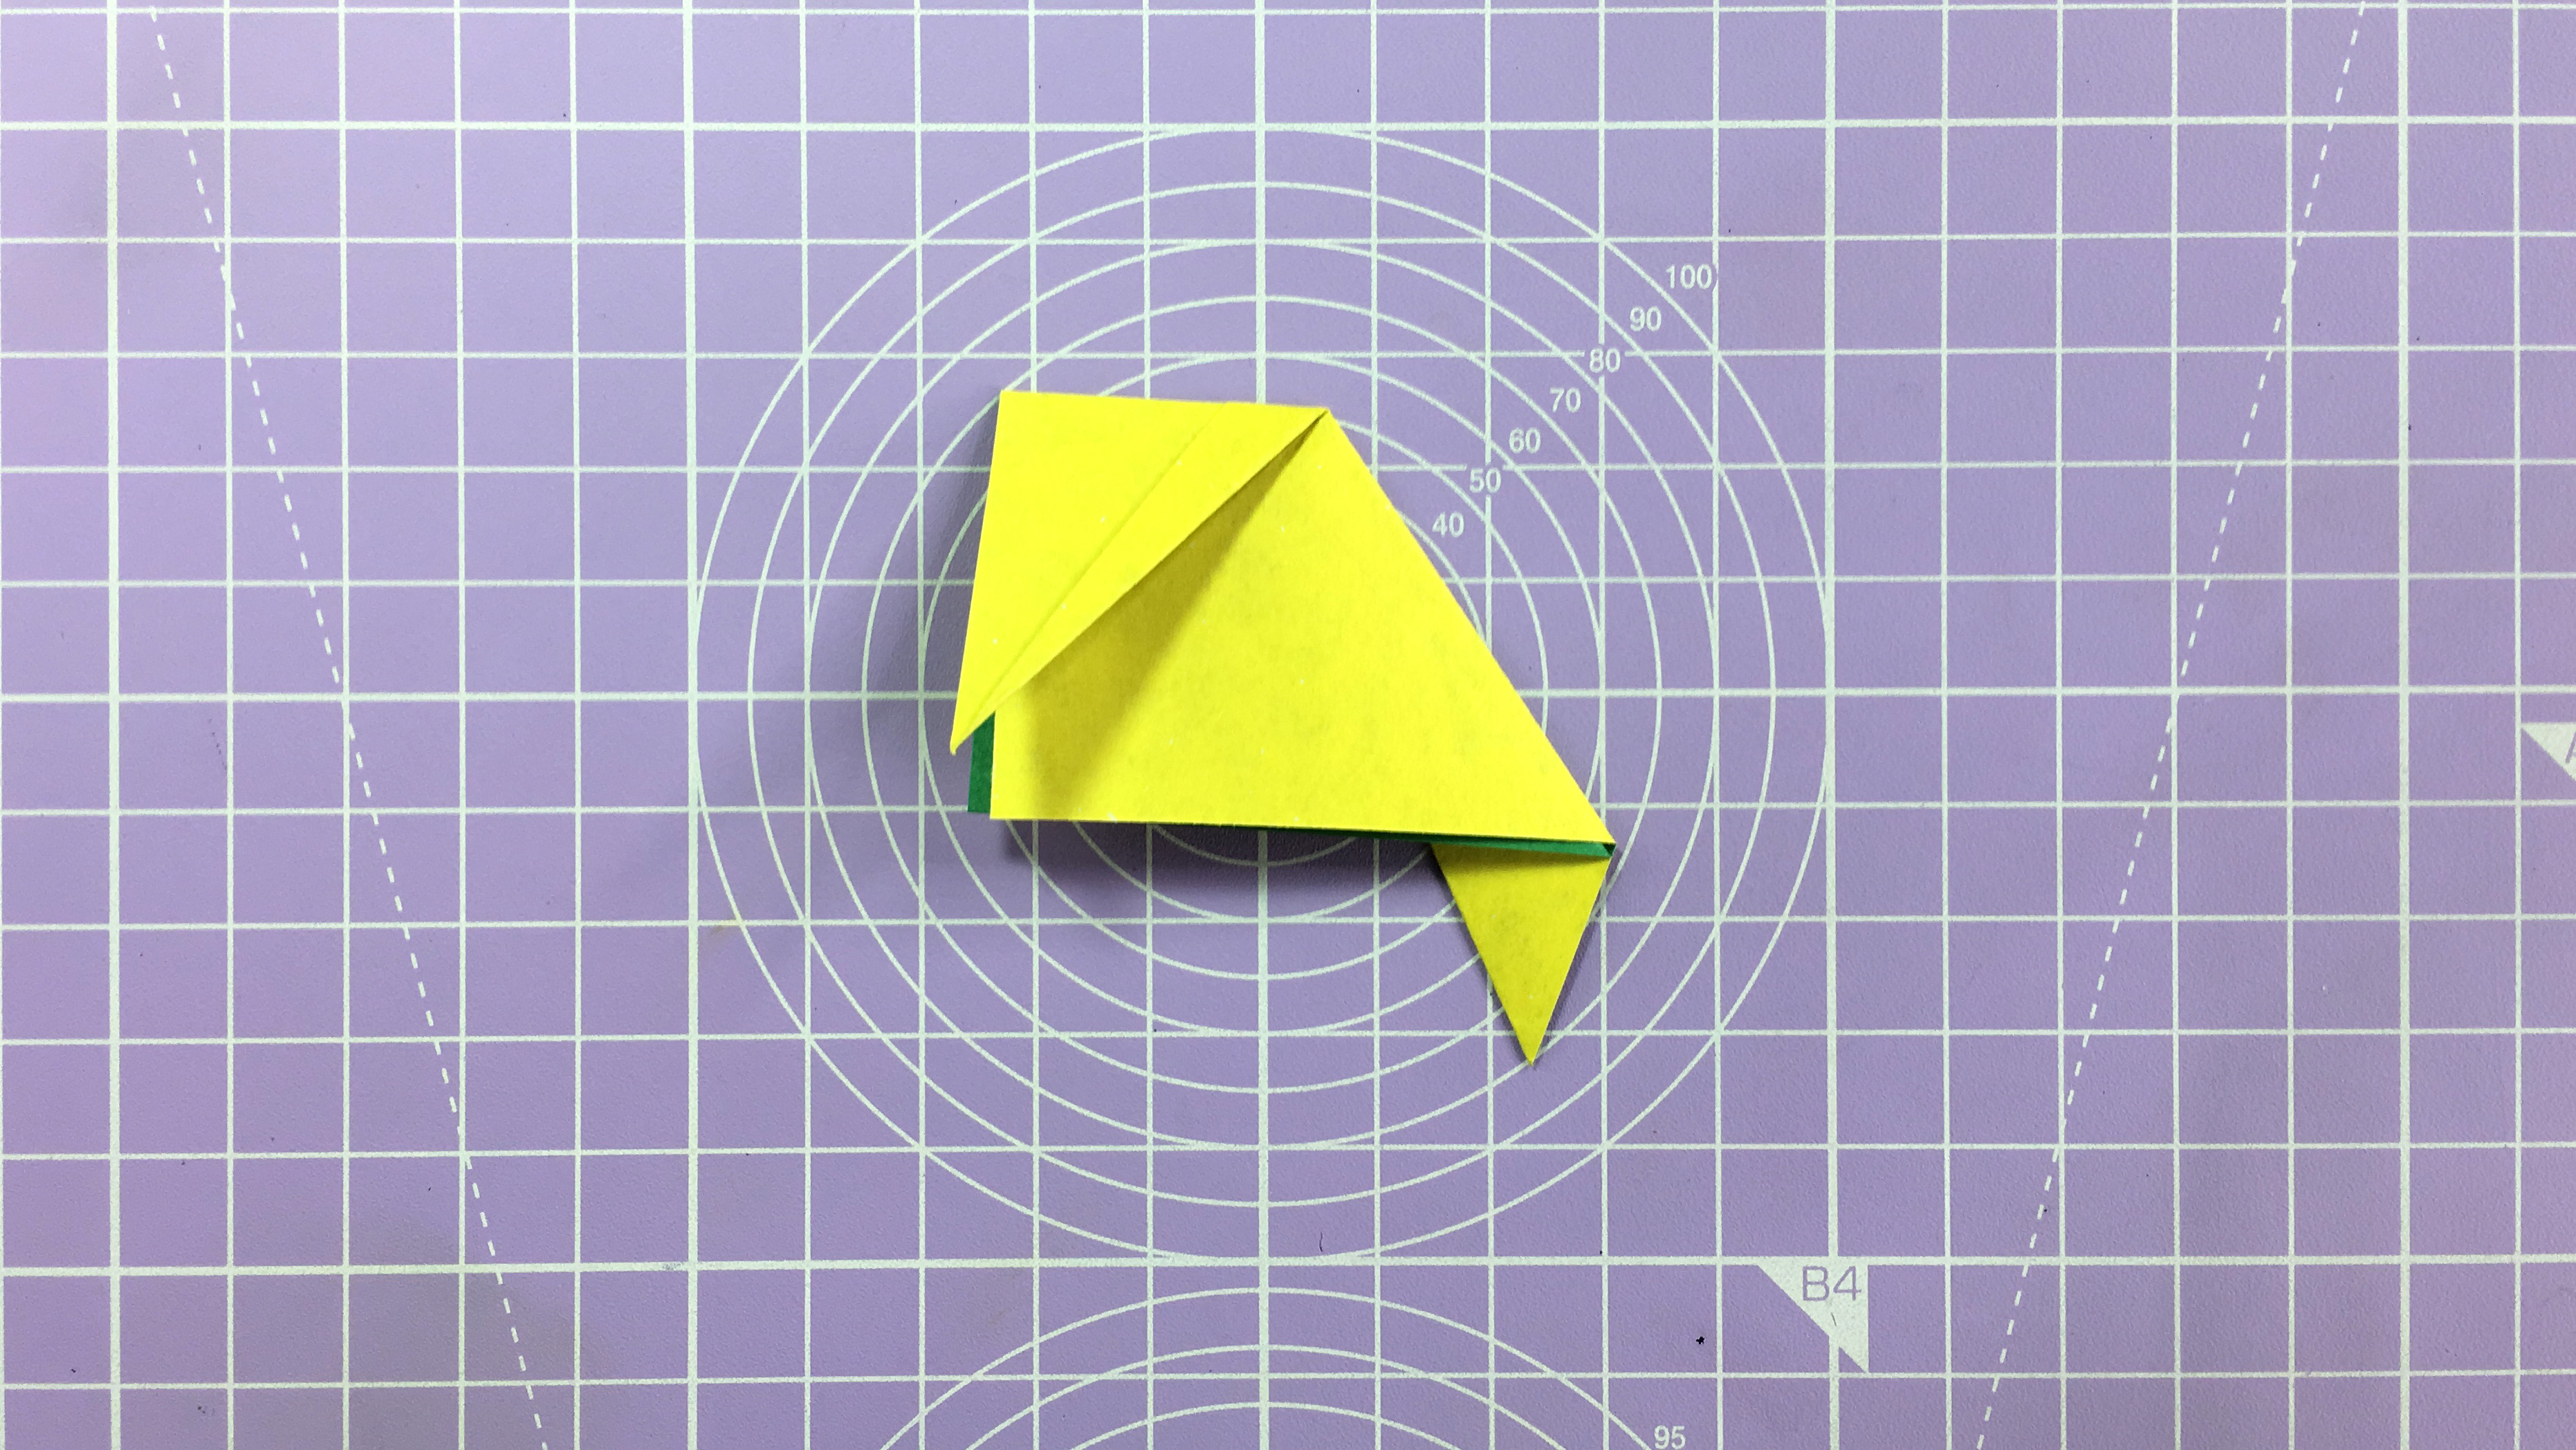 How to make an easy origami leaf - step 4b